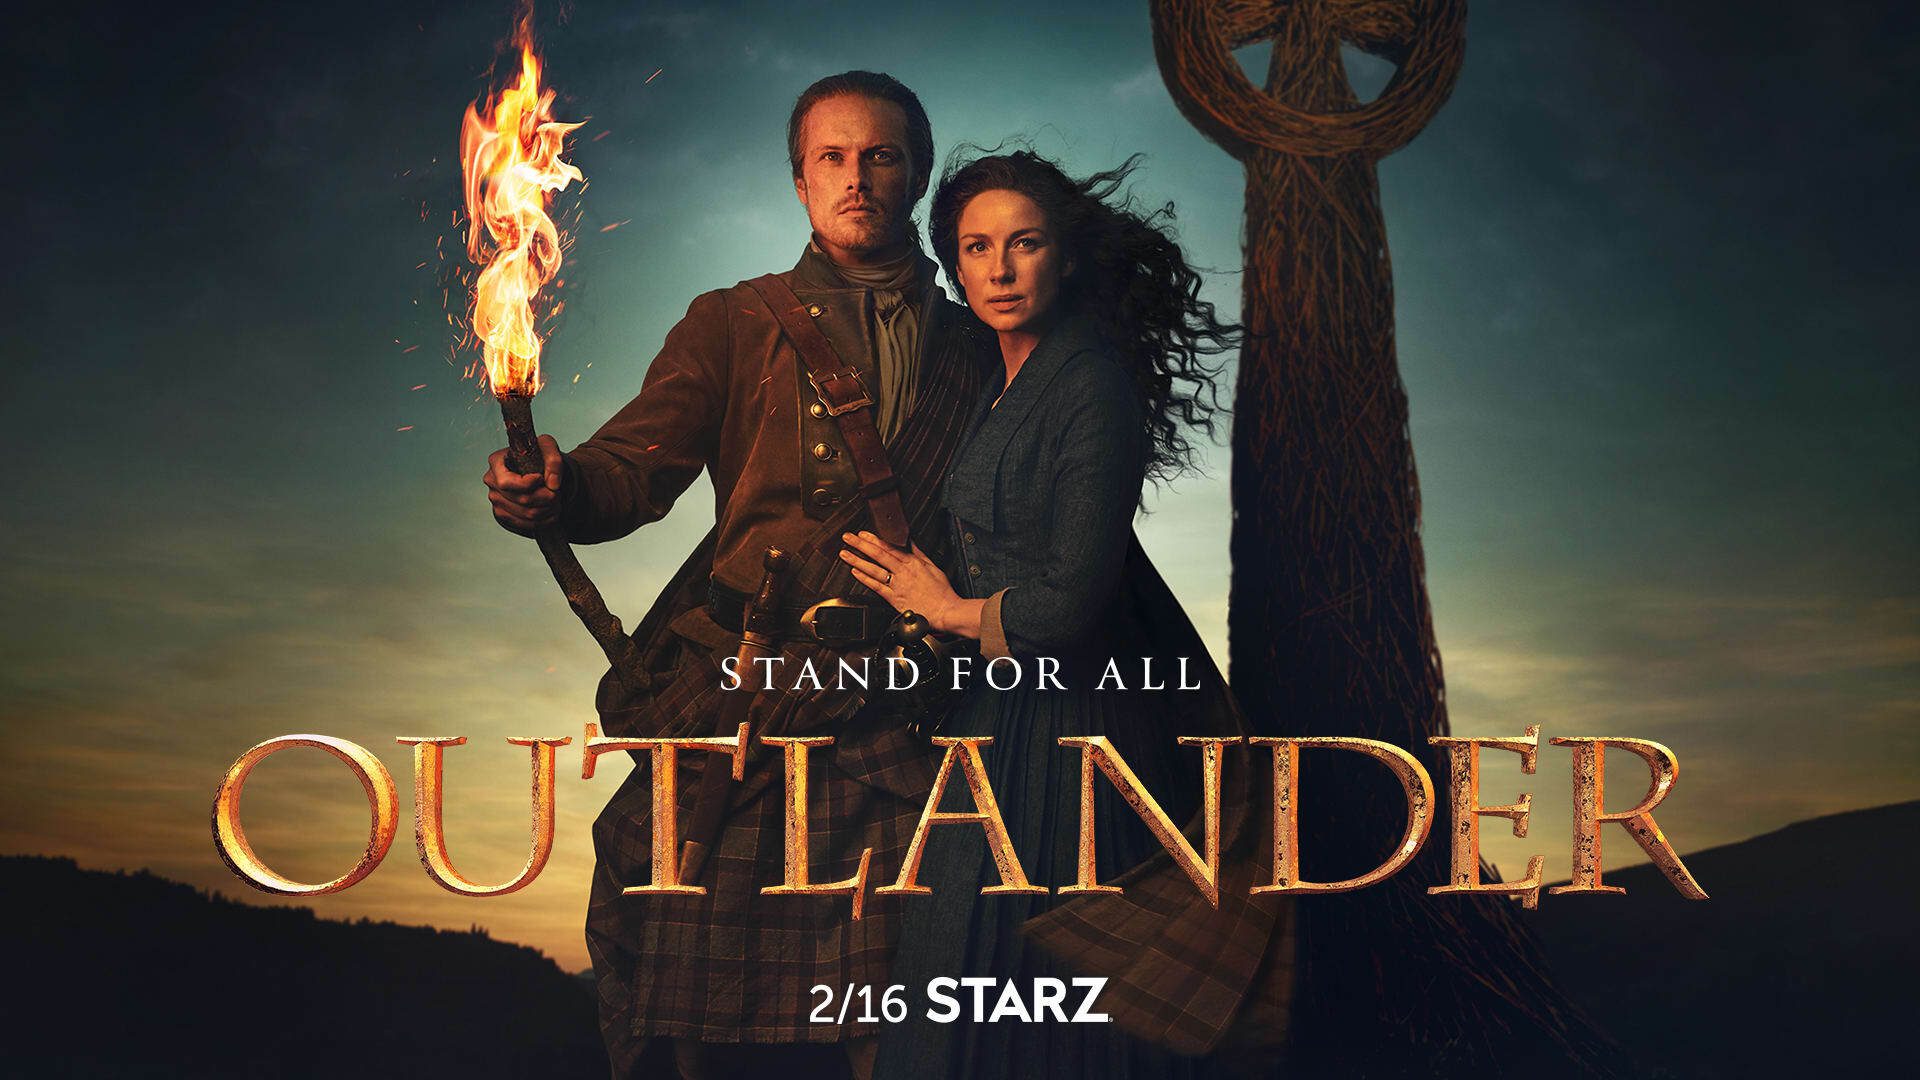 How to Watch Outlander Season 6 Online